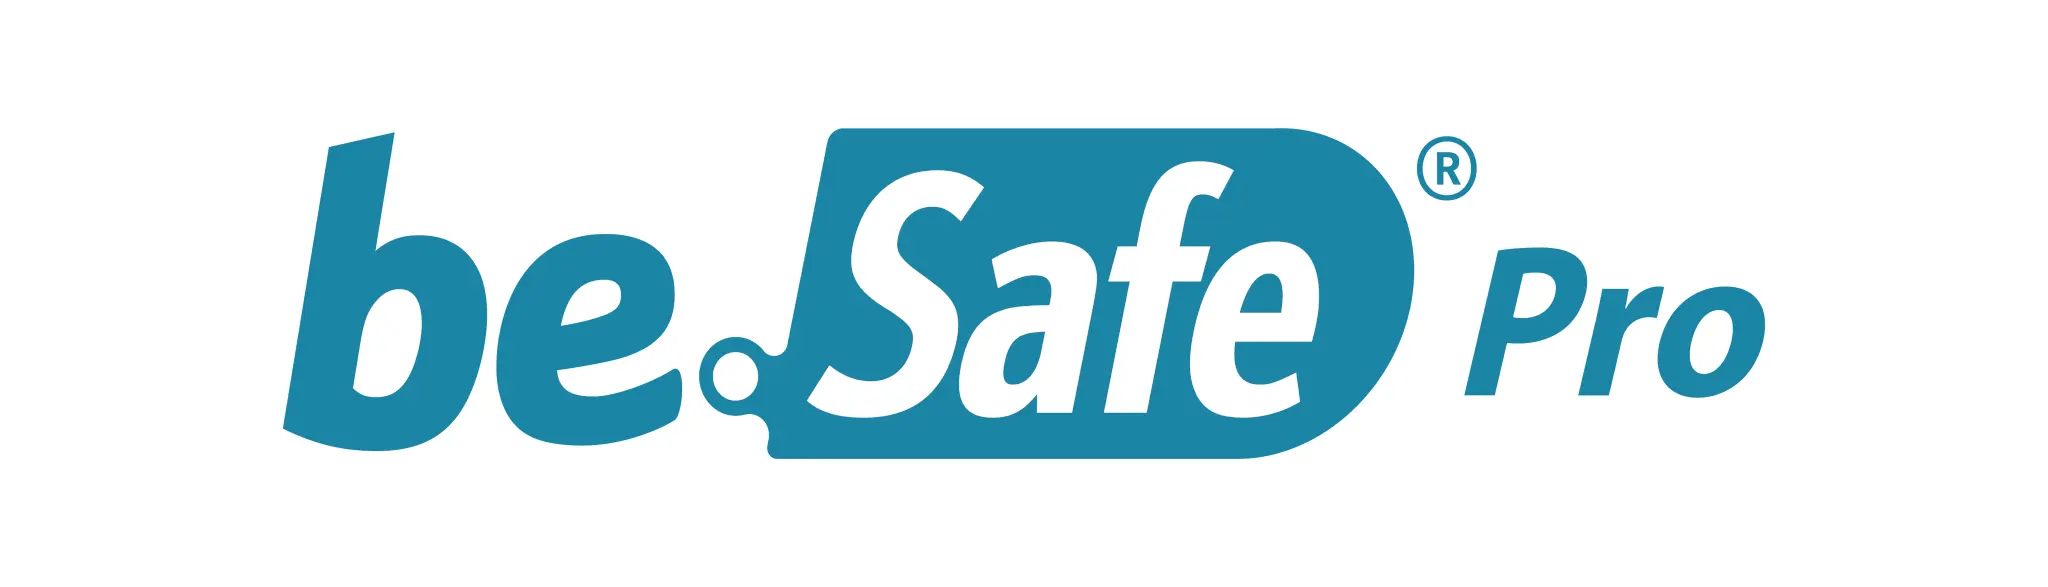 be.Safe Pro Teldat tool